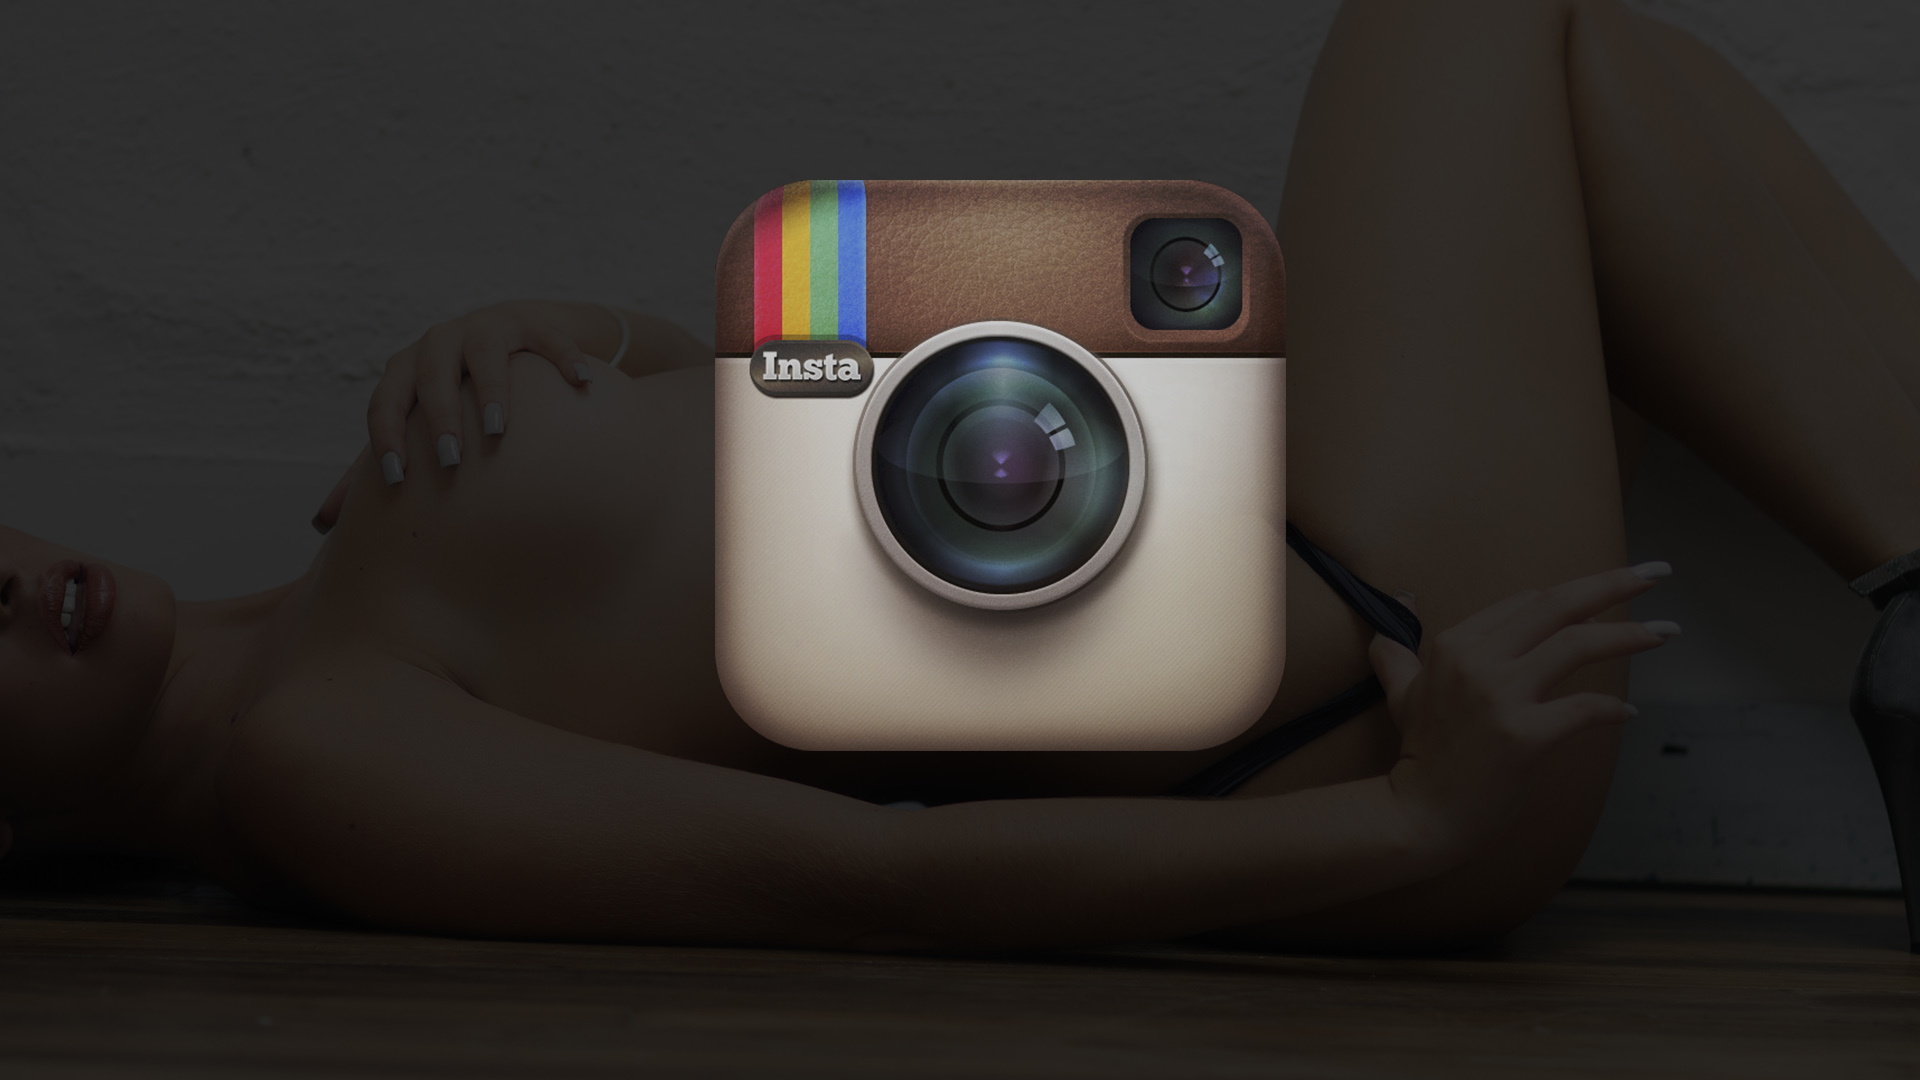 dezeree bumanglag recommends Chicas Sexis 2020 Instagram